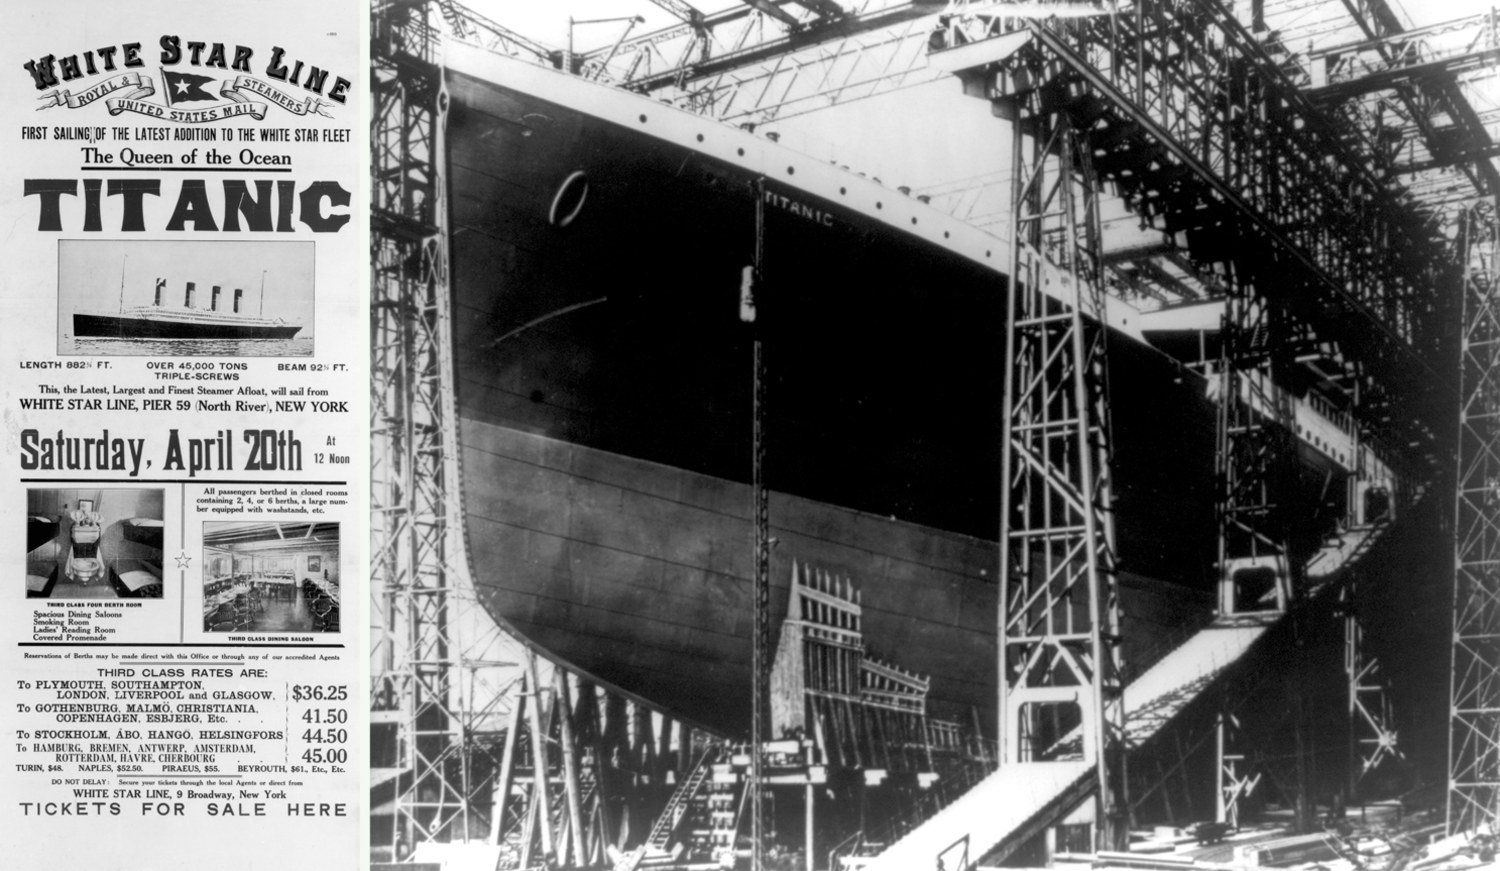 Titanic 100 Years Later